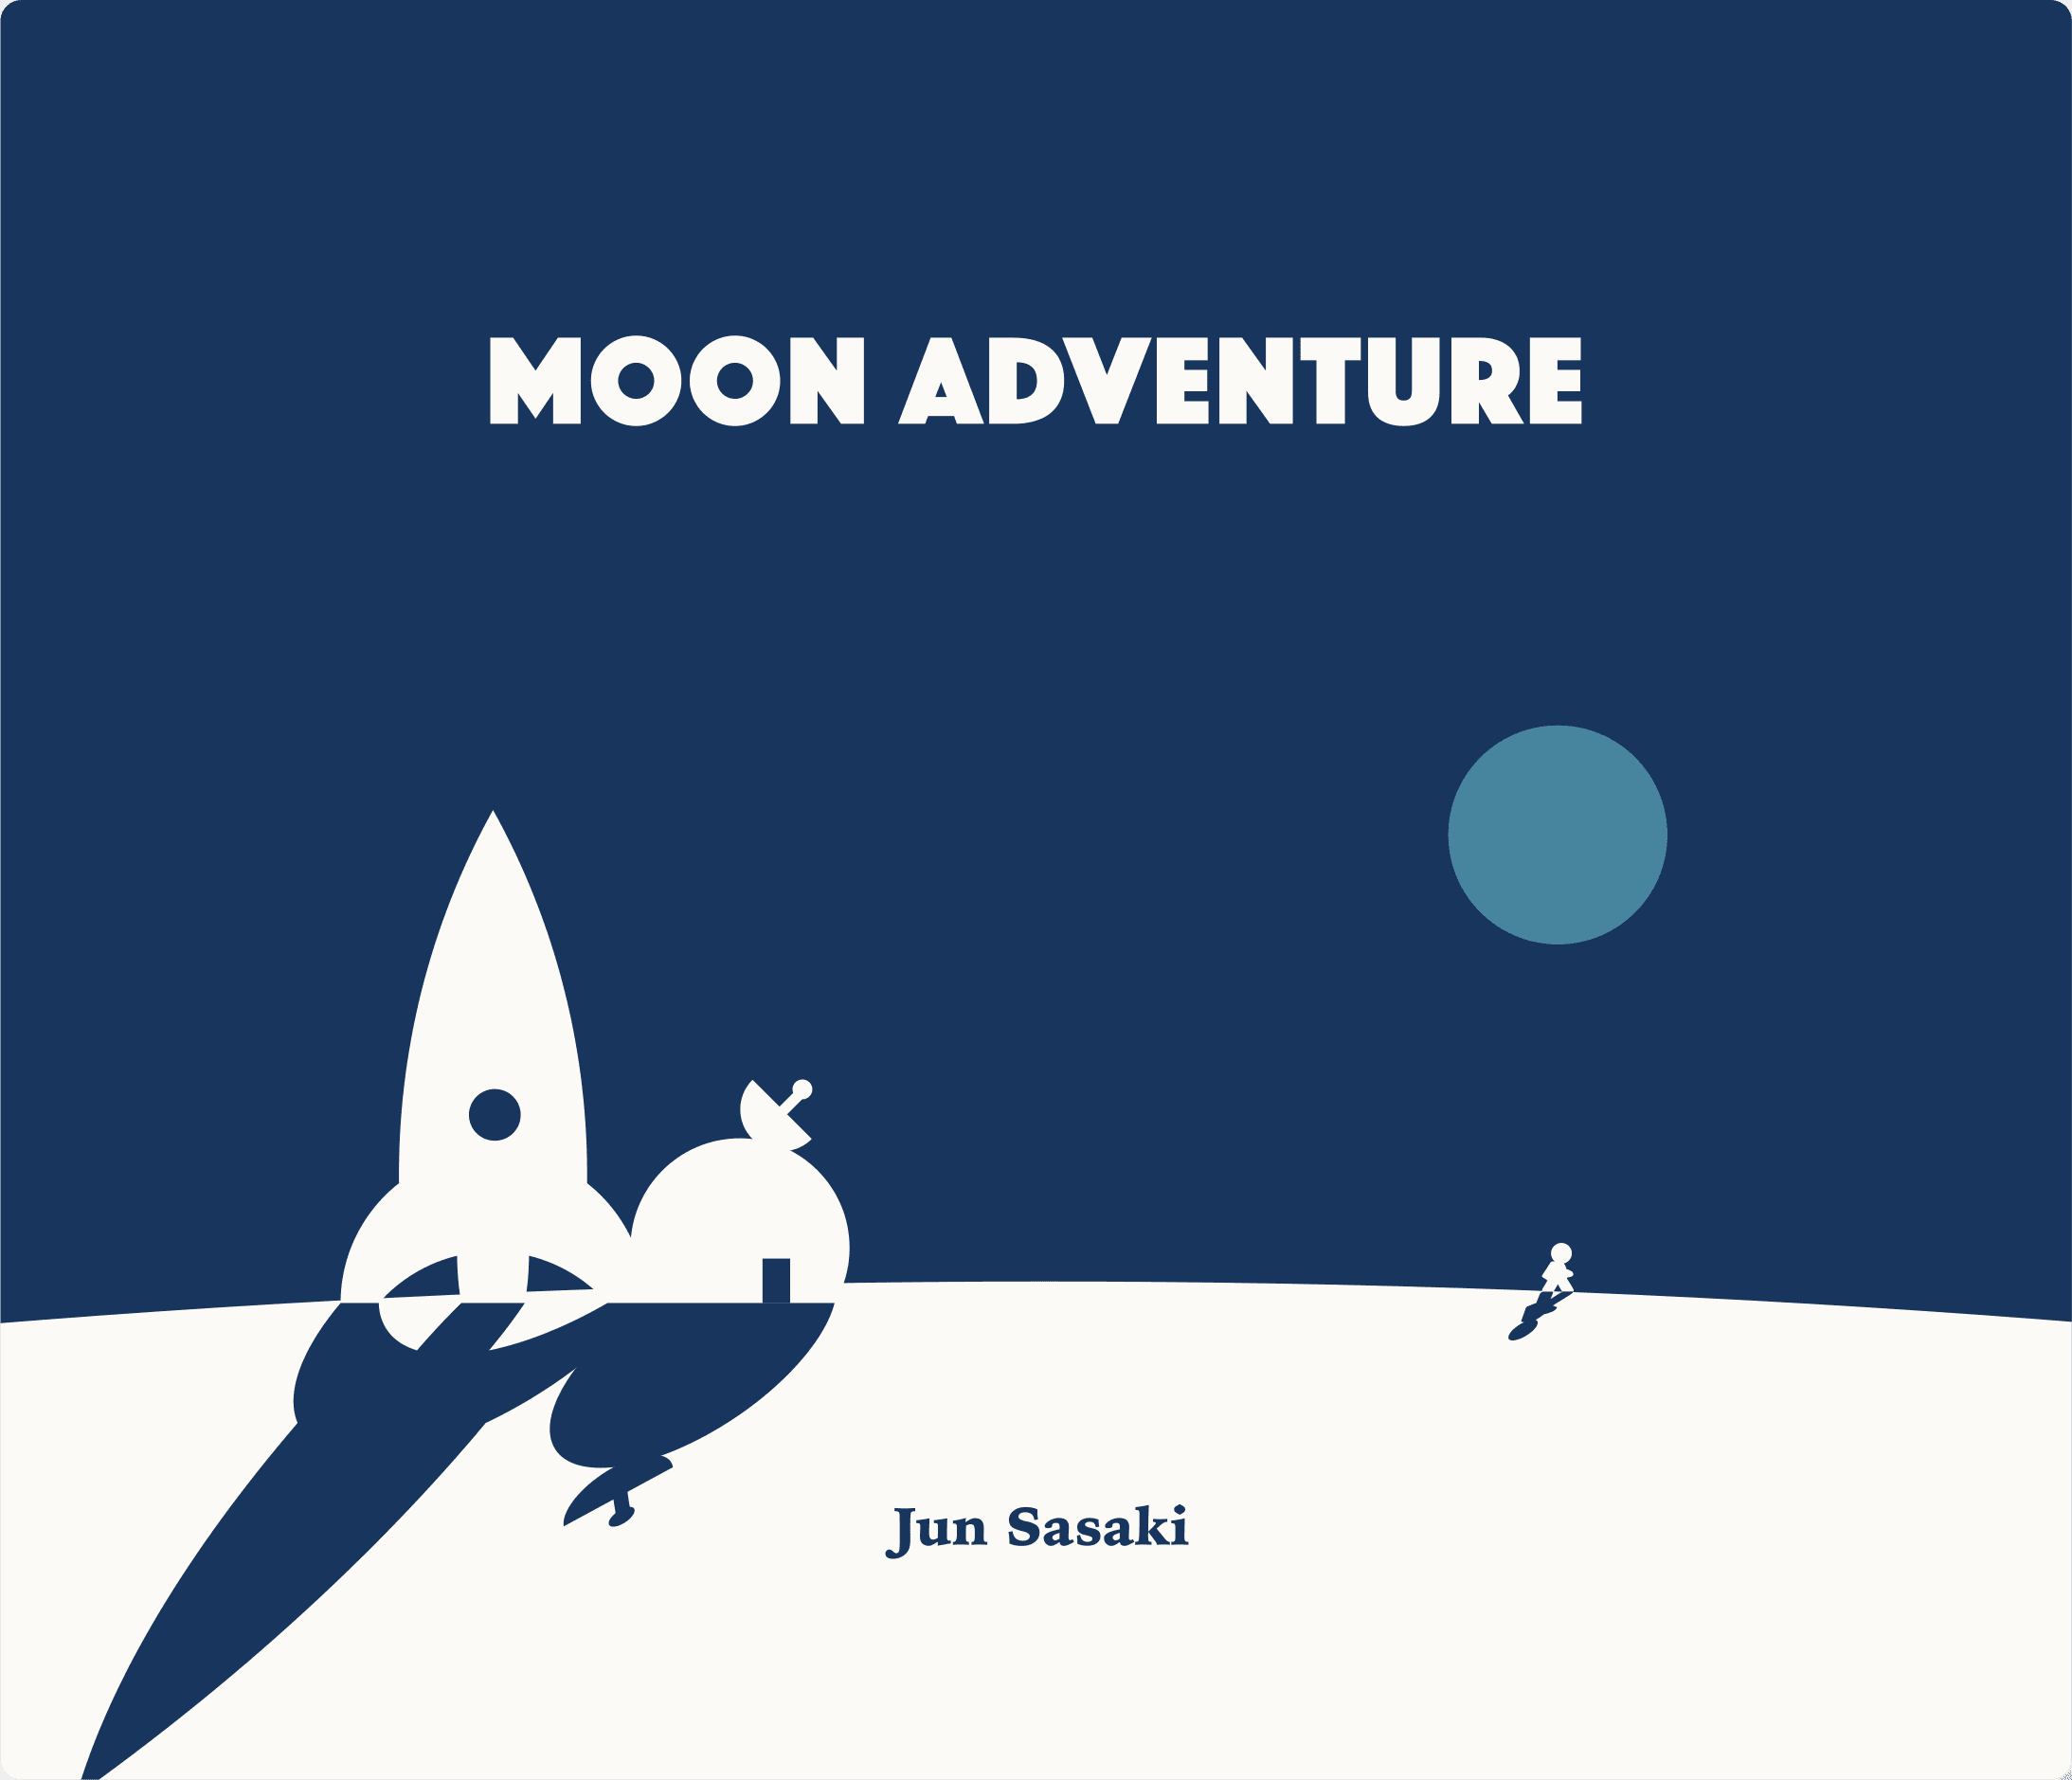 Moon Adventure. Moon Adventure настольная игра. From the Moon настольная игра. Moon Adventure to New World. Adventure moon